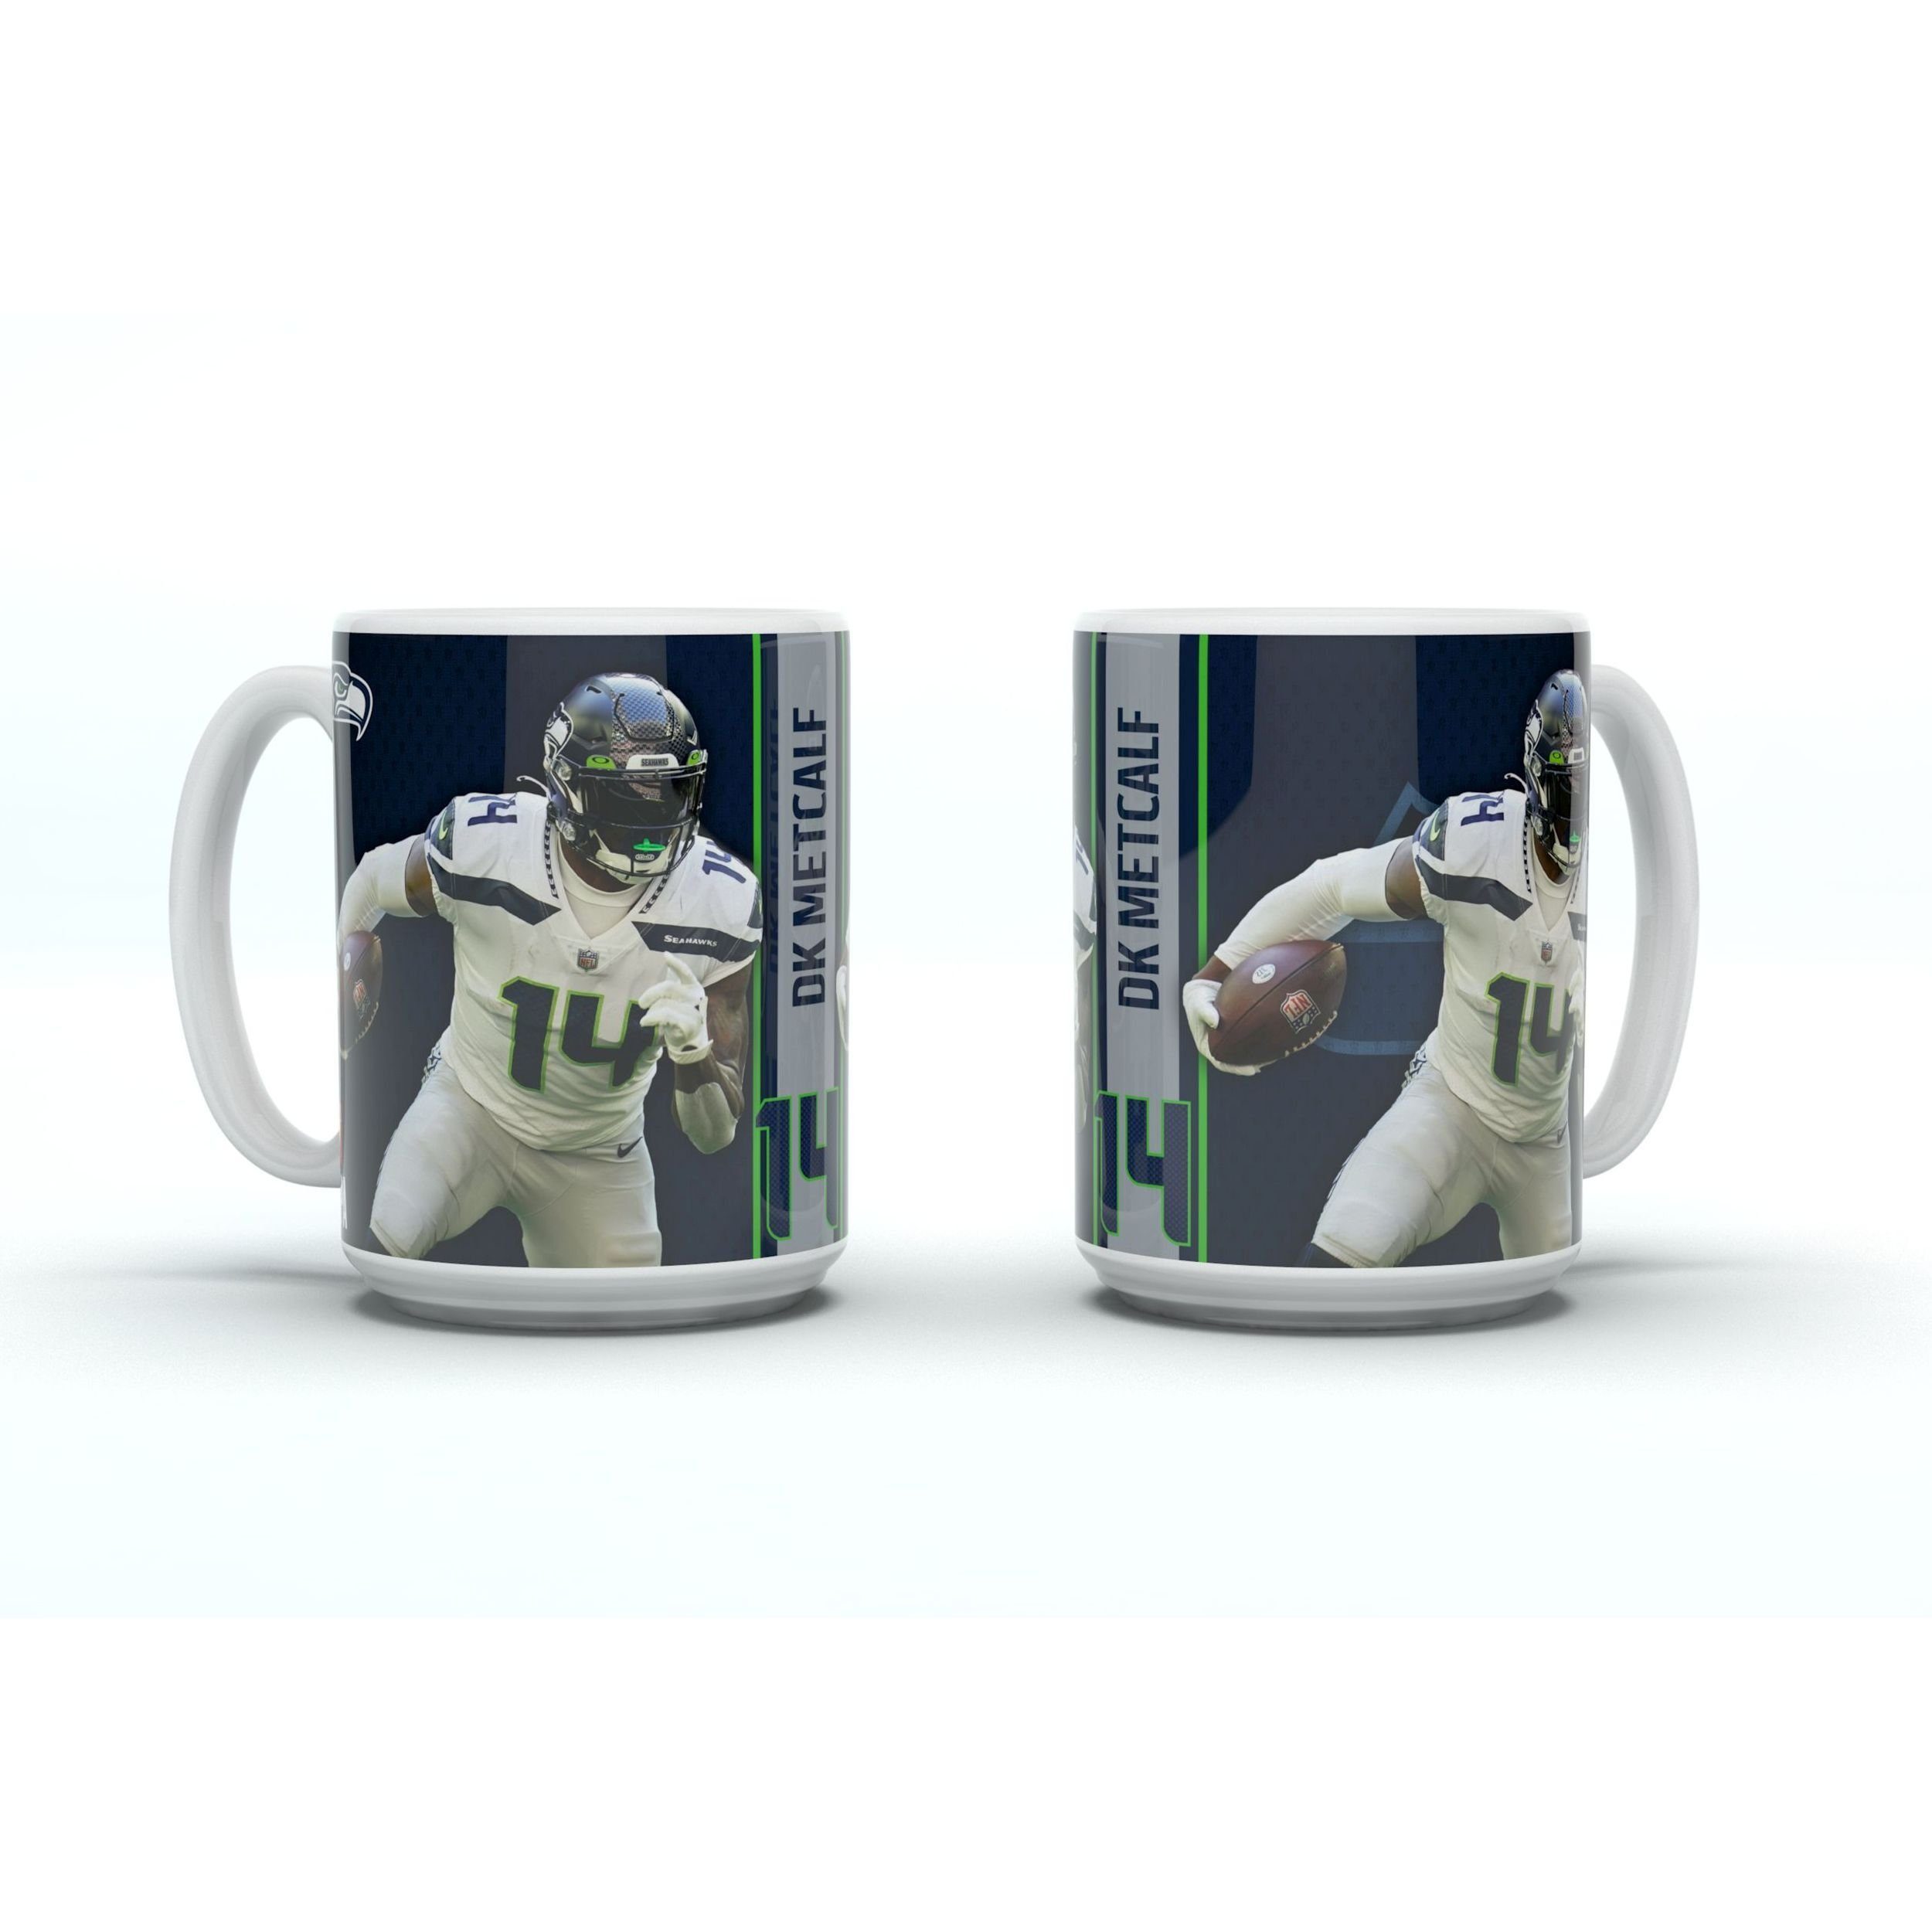 Great Tasse Metcalf Seahawks D. K. Seattle MOTION Branding 45 Tasse NFL